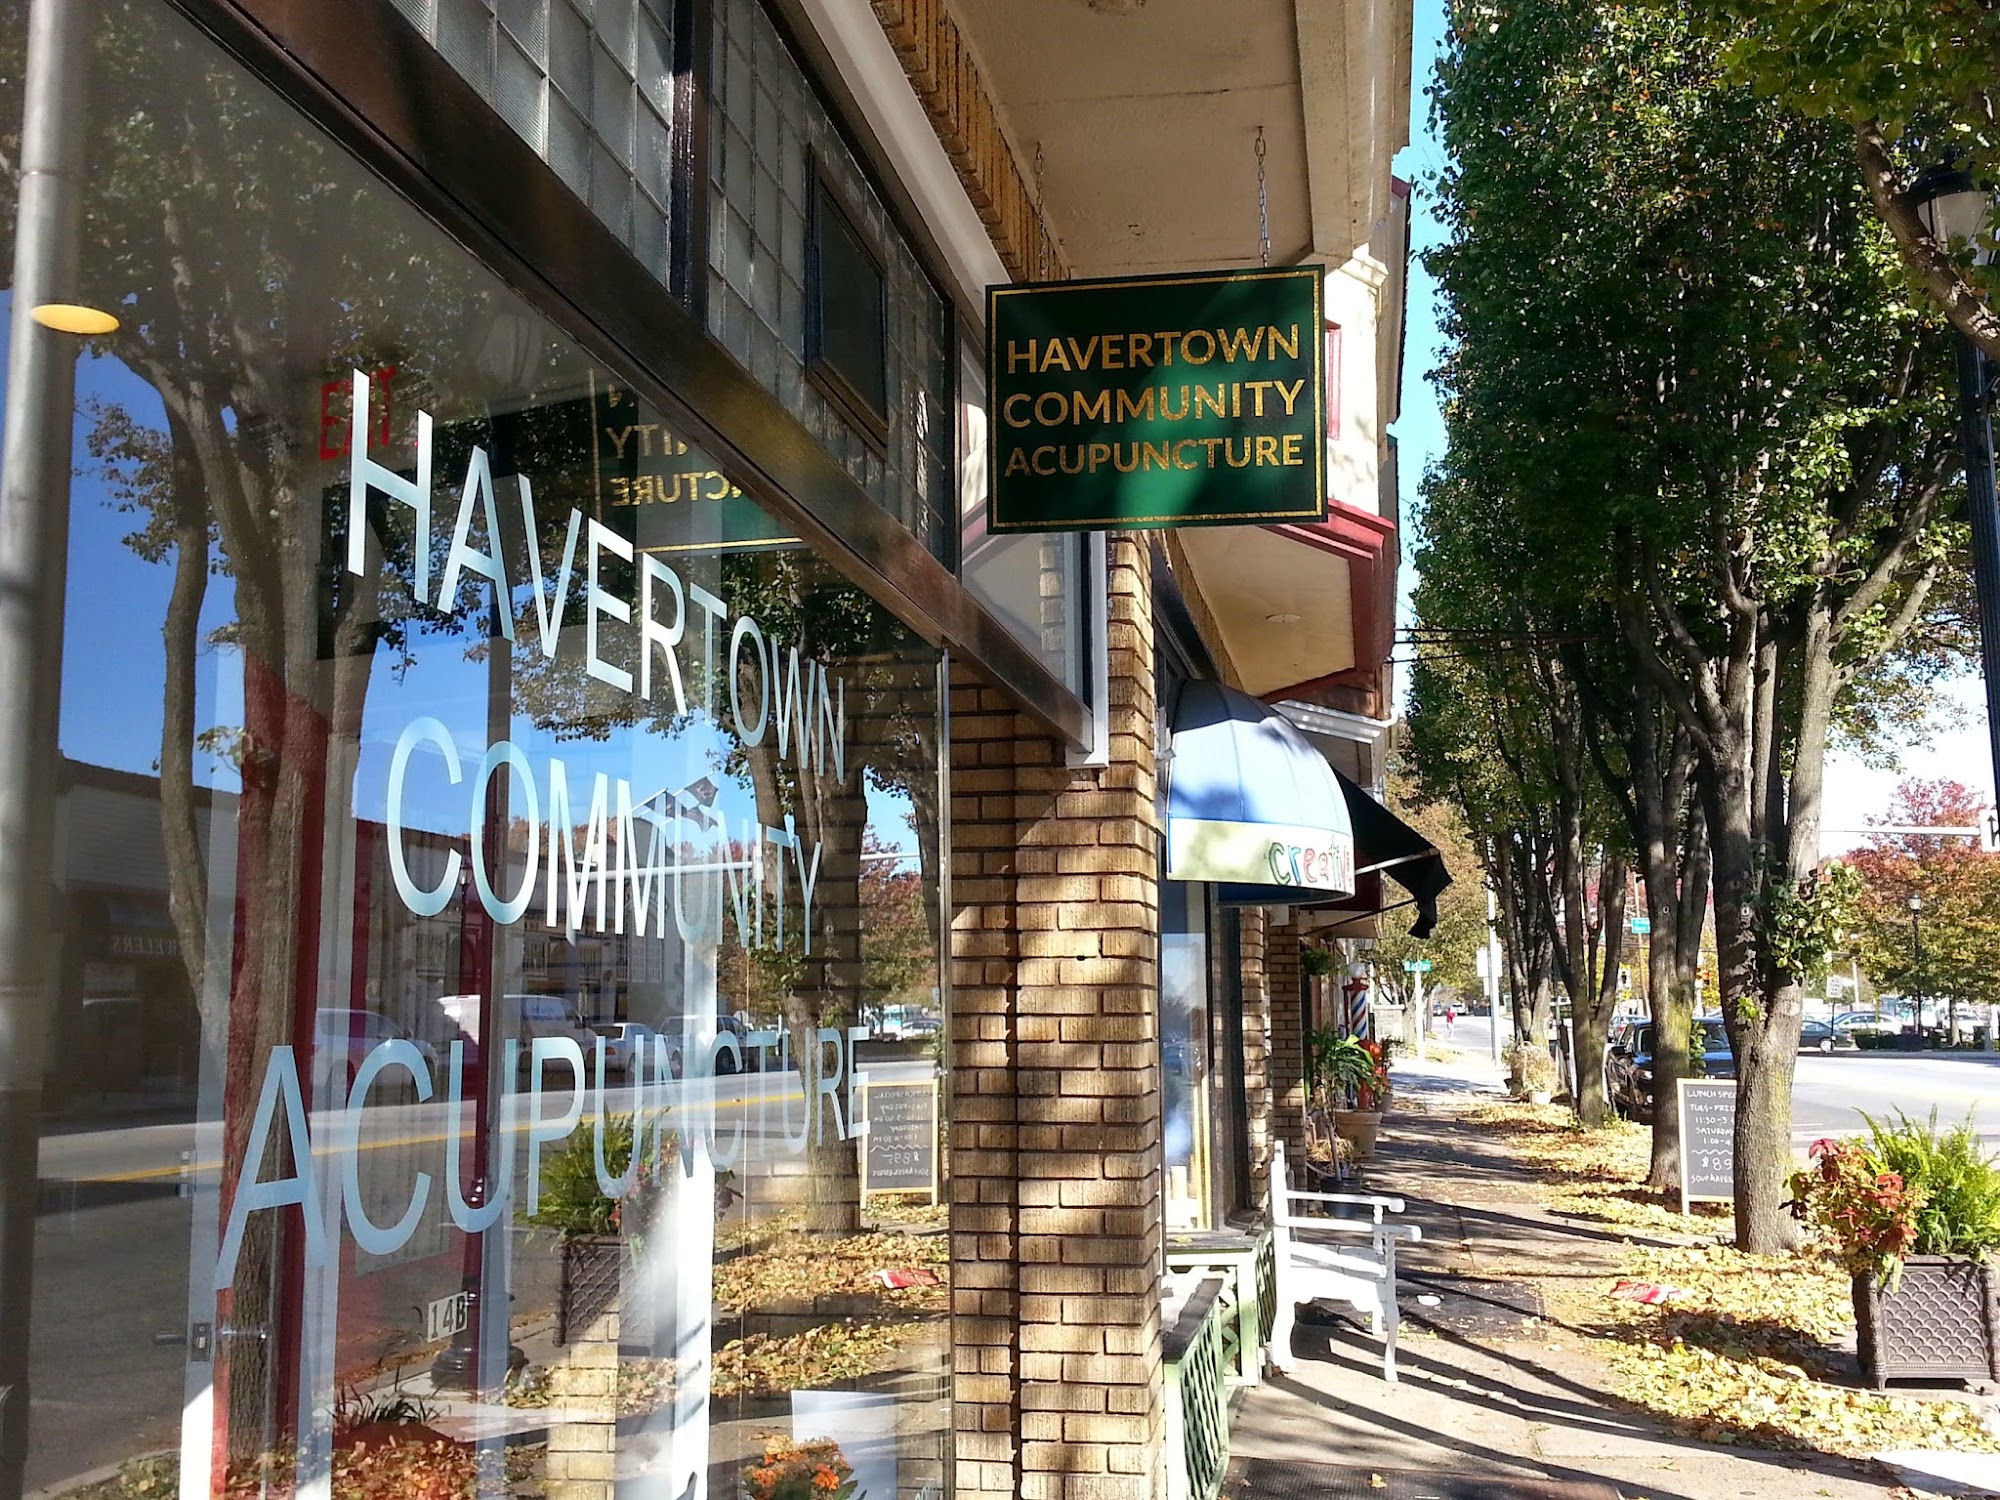 Havertown Community Acupuncture